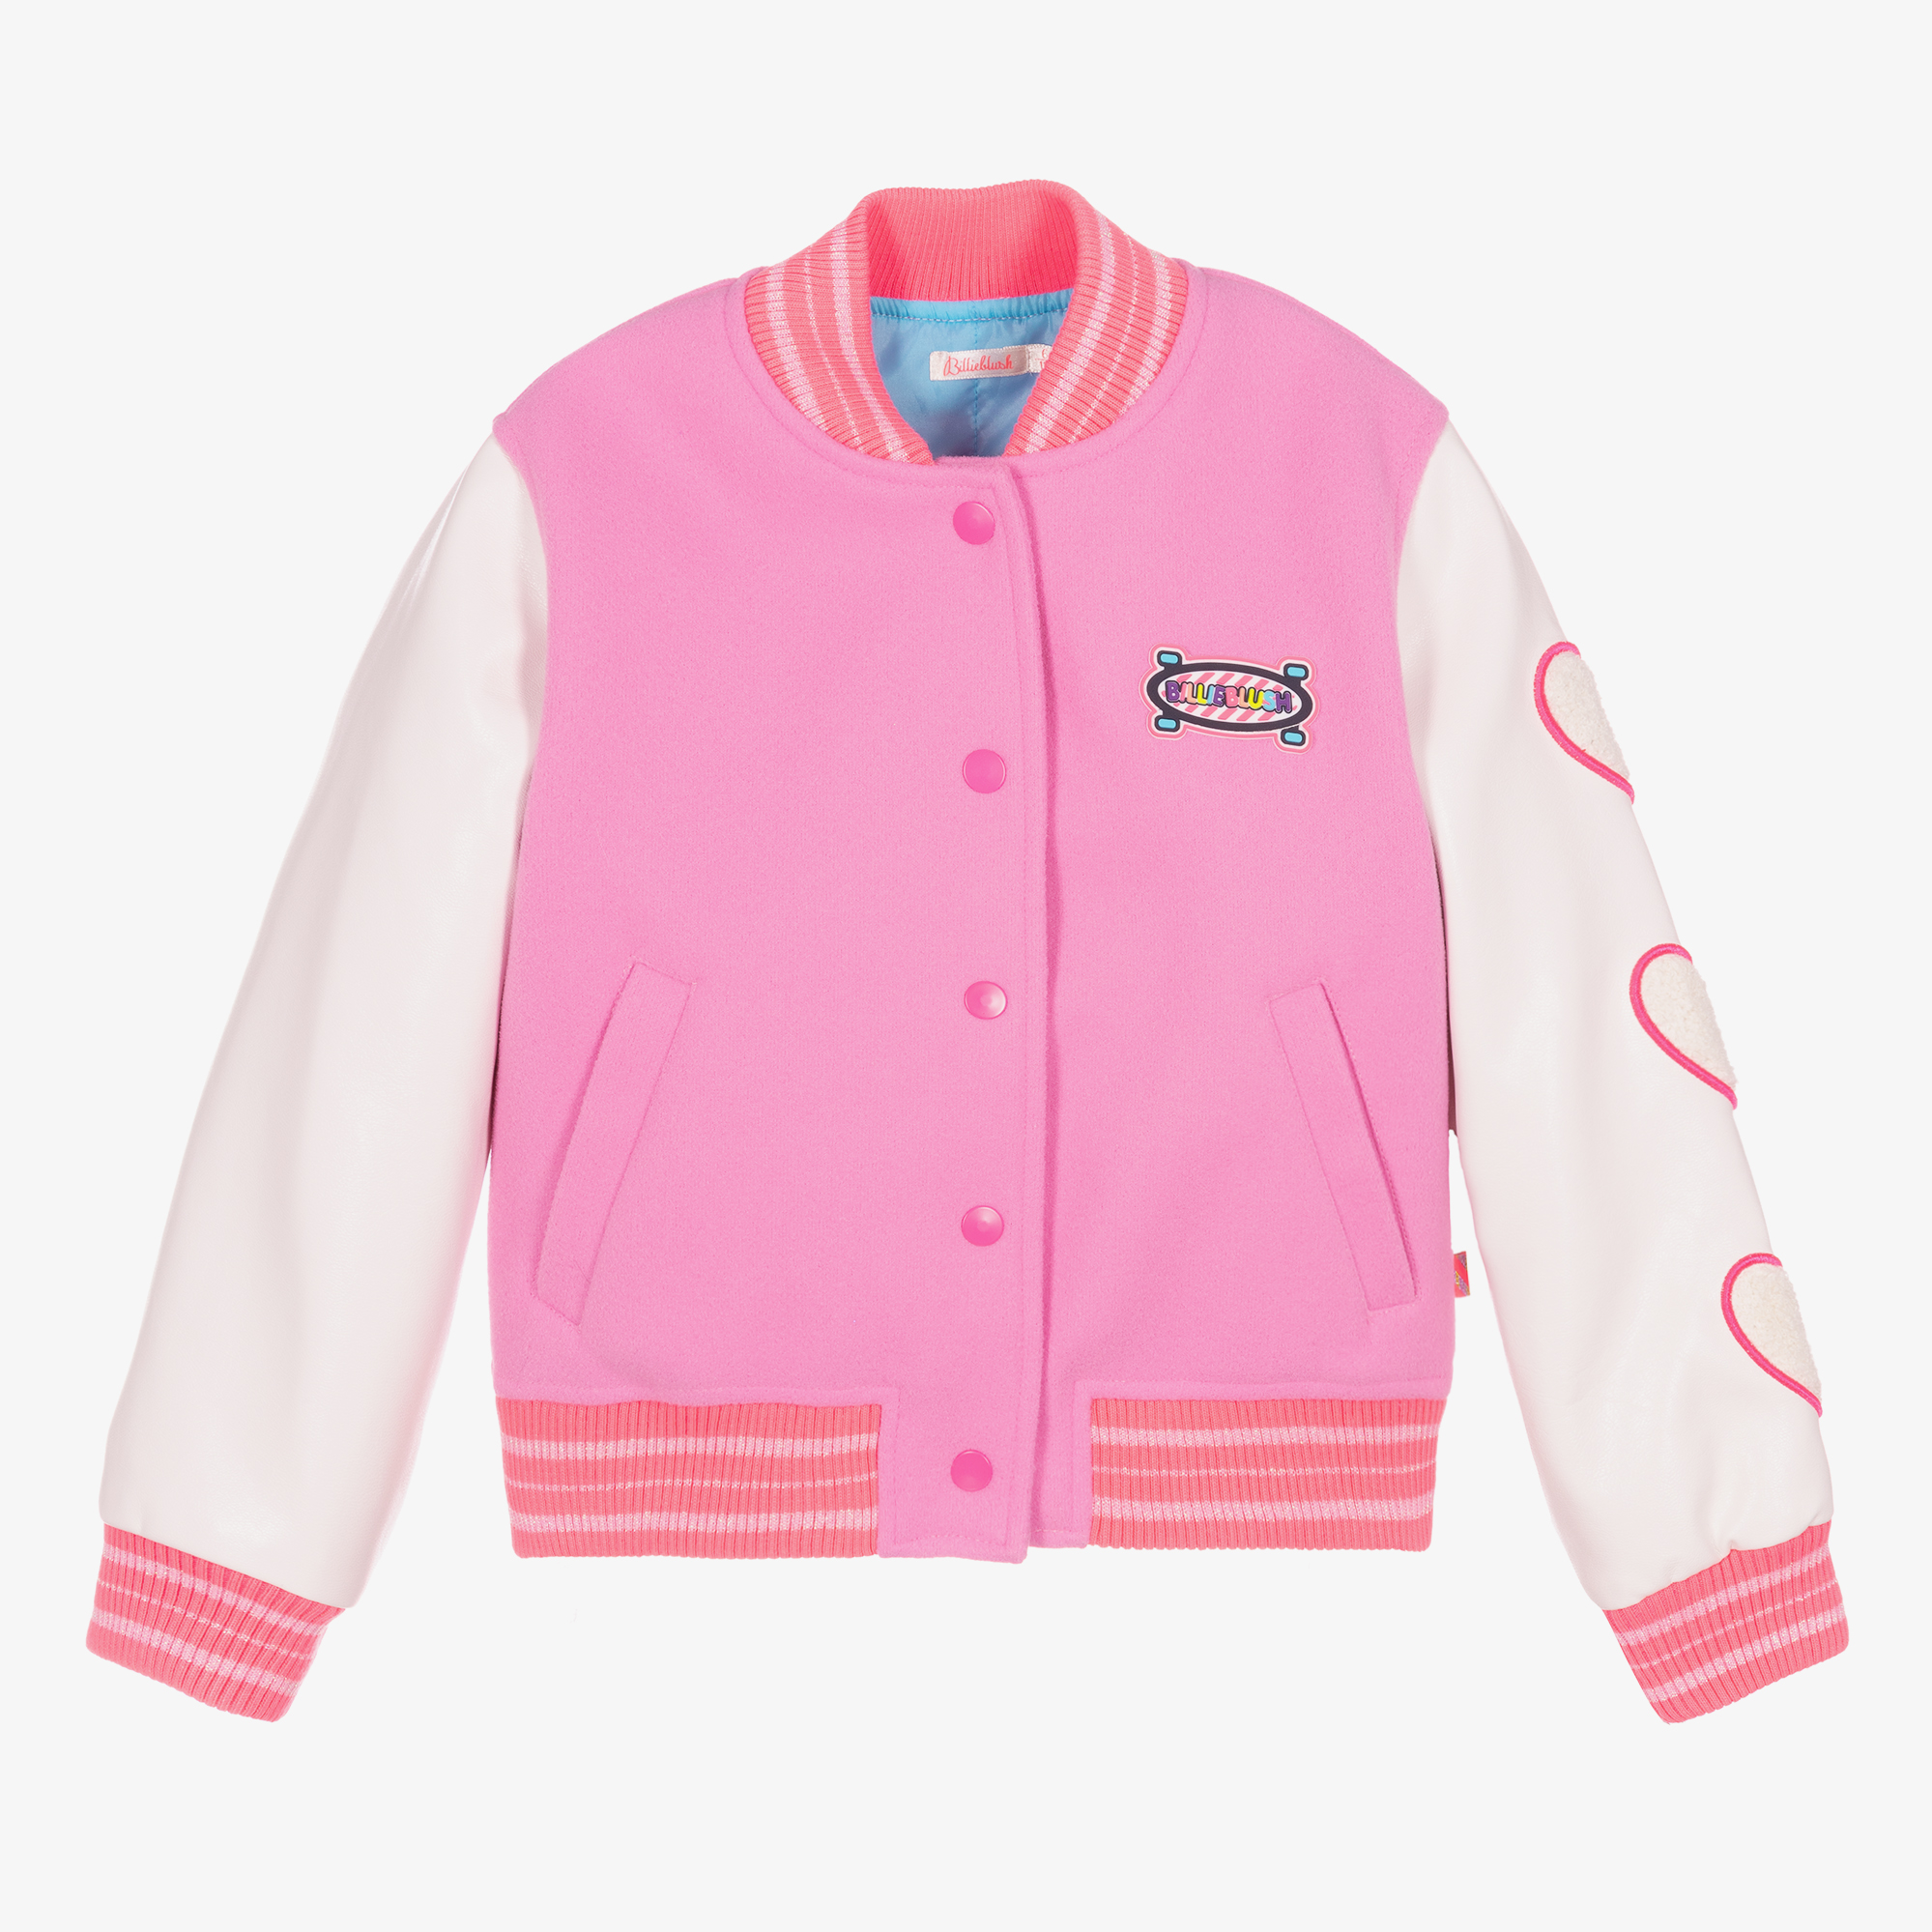 Colorichiari faux-leather jacket - Pink